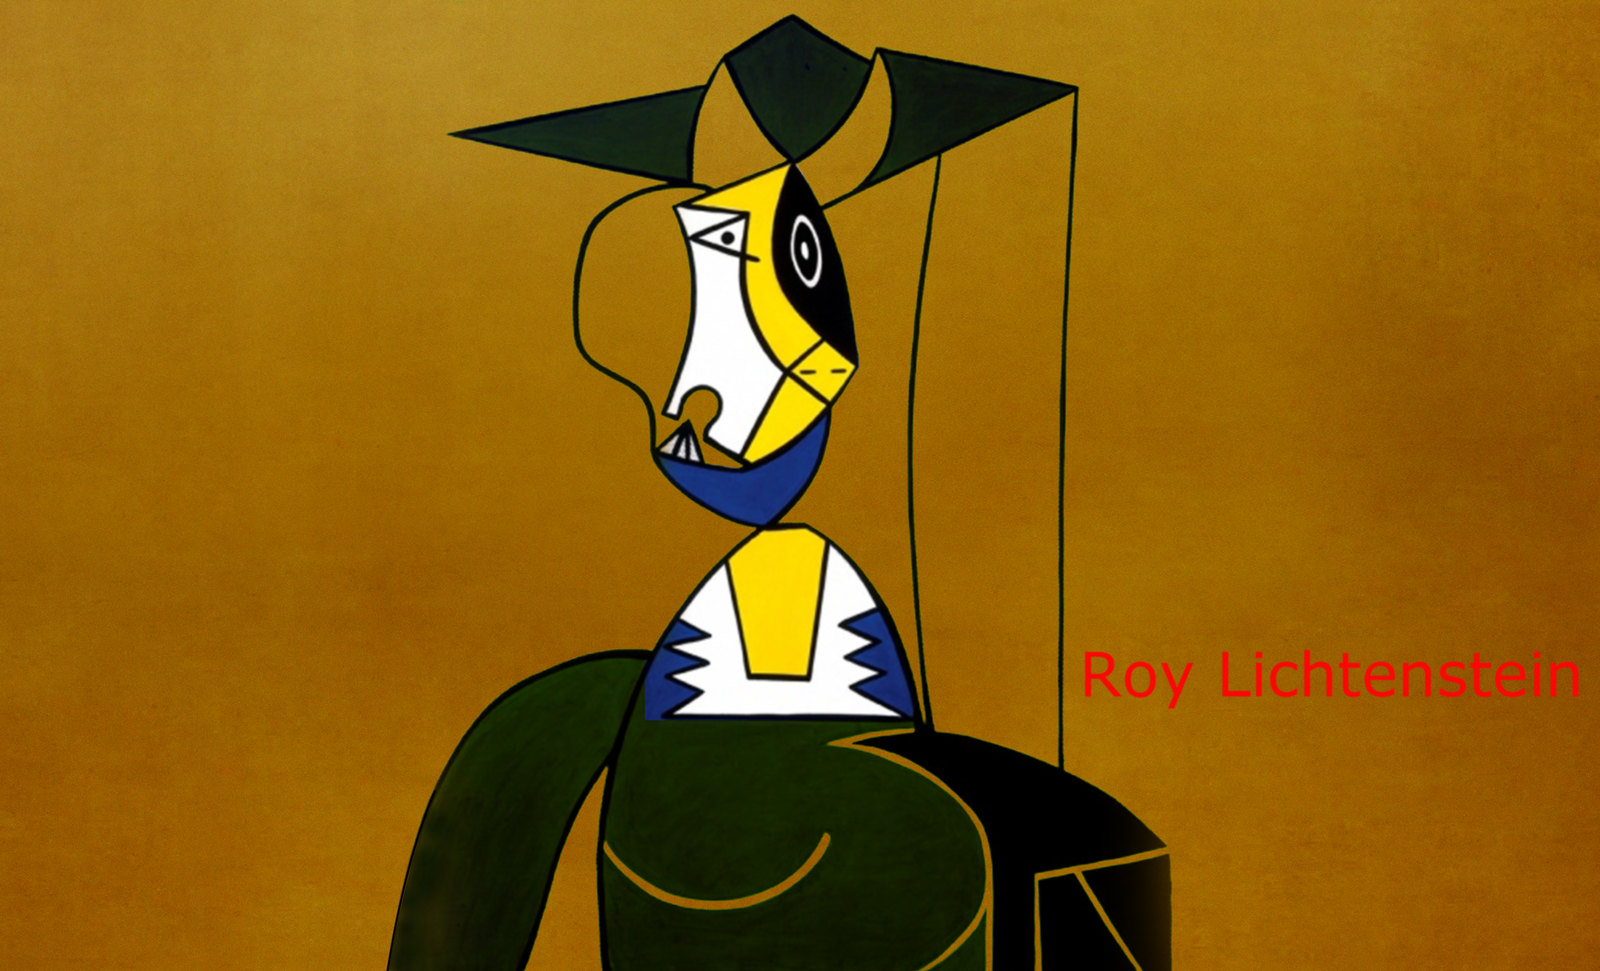 Mujer en Gris, caracterización de Pablo Picasso (1942), recreación de Roy Lichtenstein (1962).